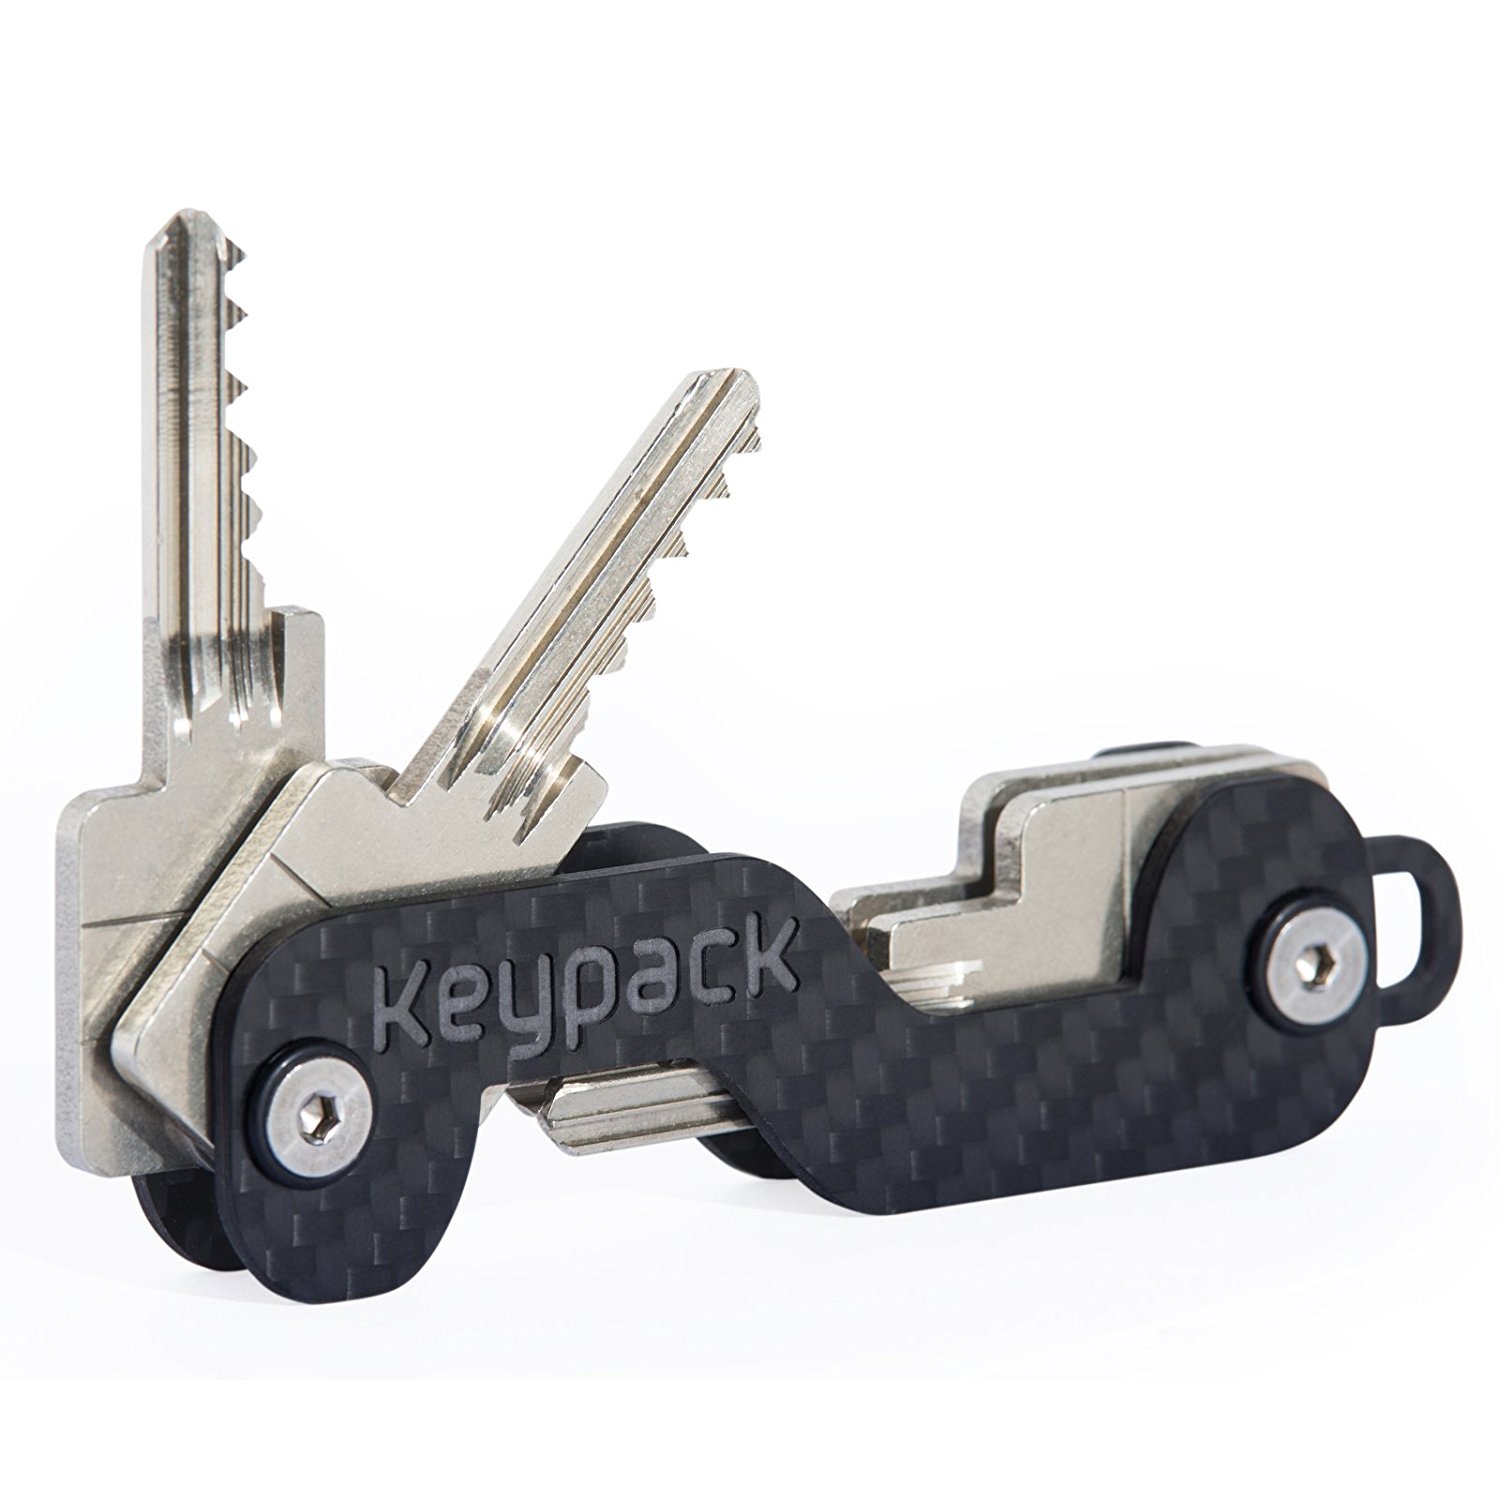 KEYPACK - Carbon Fiber Key Holder - Smart Key Organizer